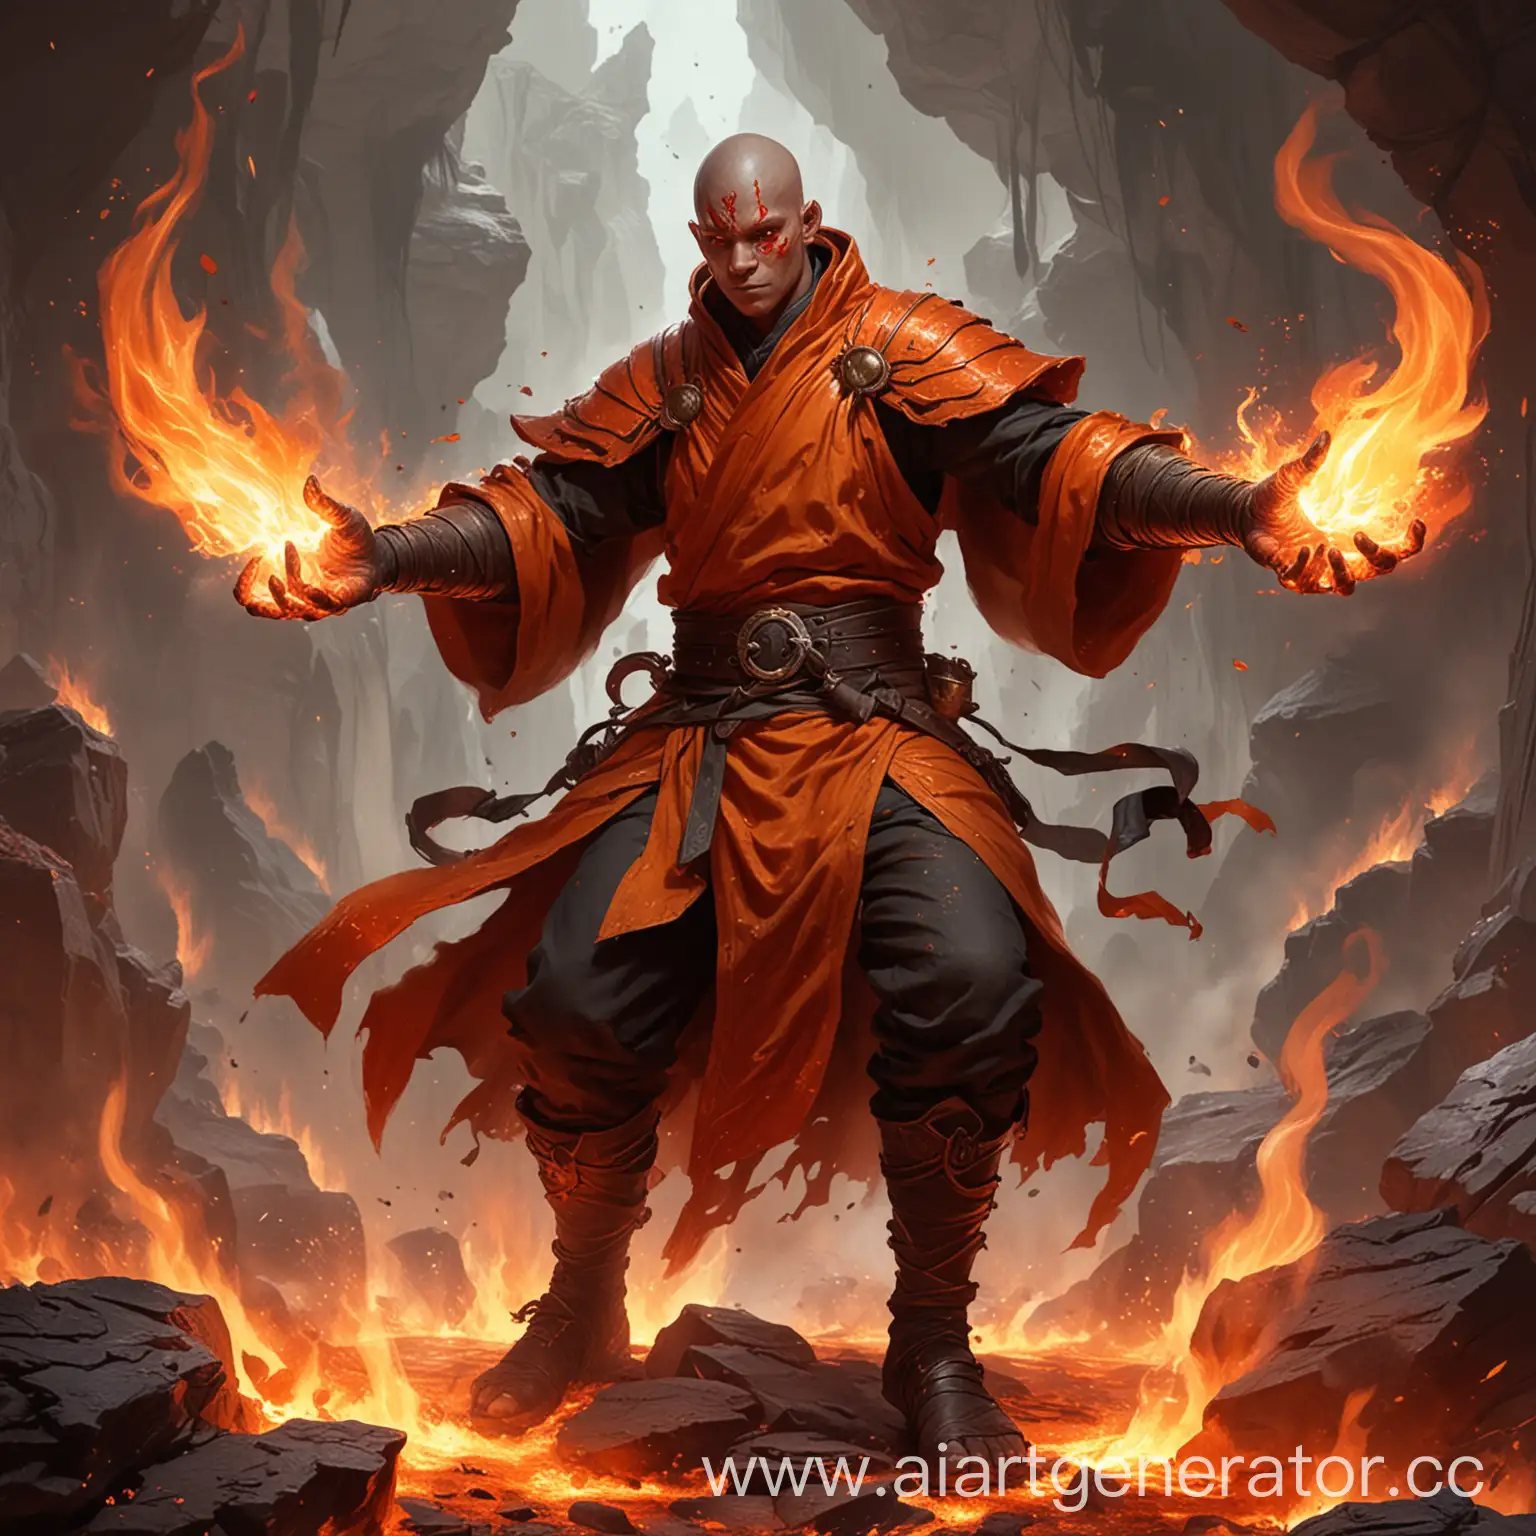 digital brush art, mtg art, man half-monk half-sorcery that is battle pose with flames around him and magma skin hands